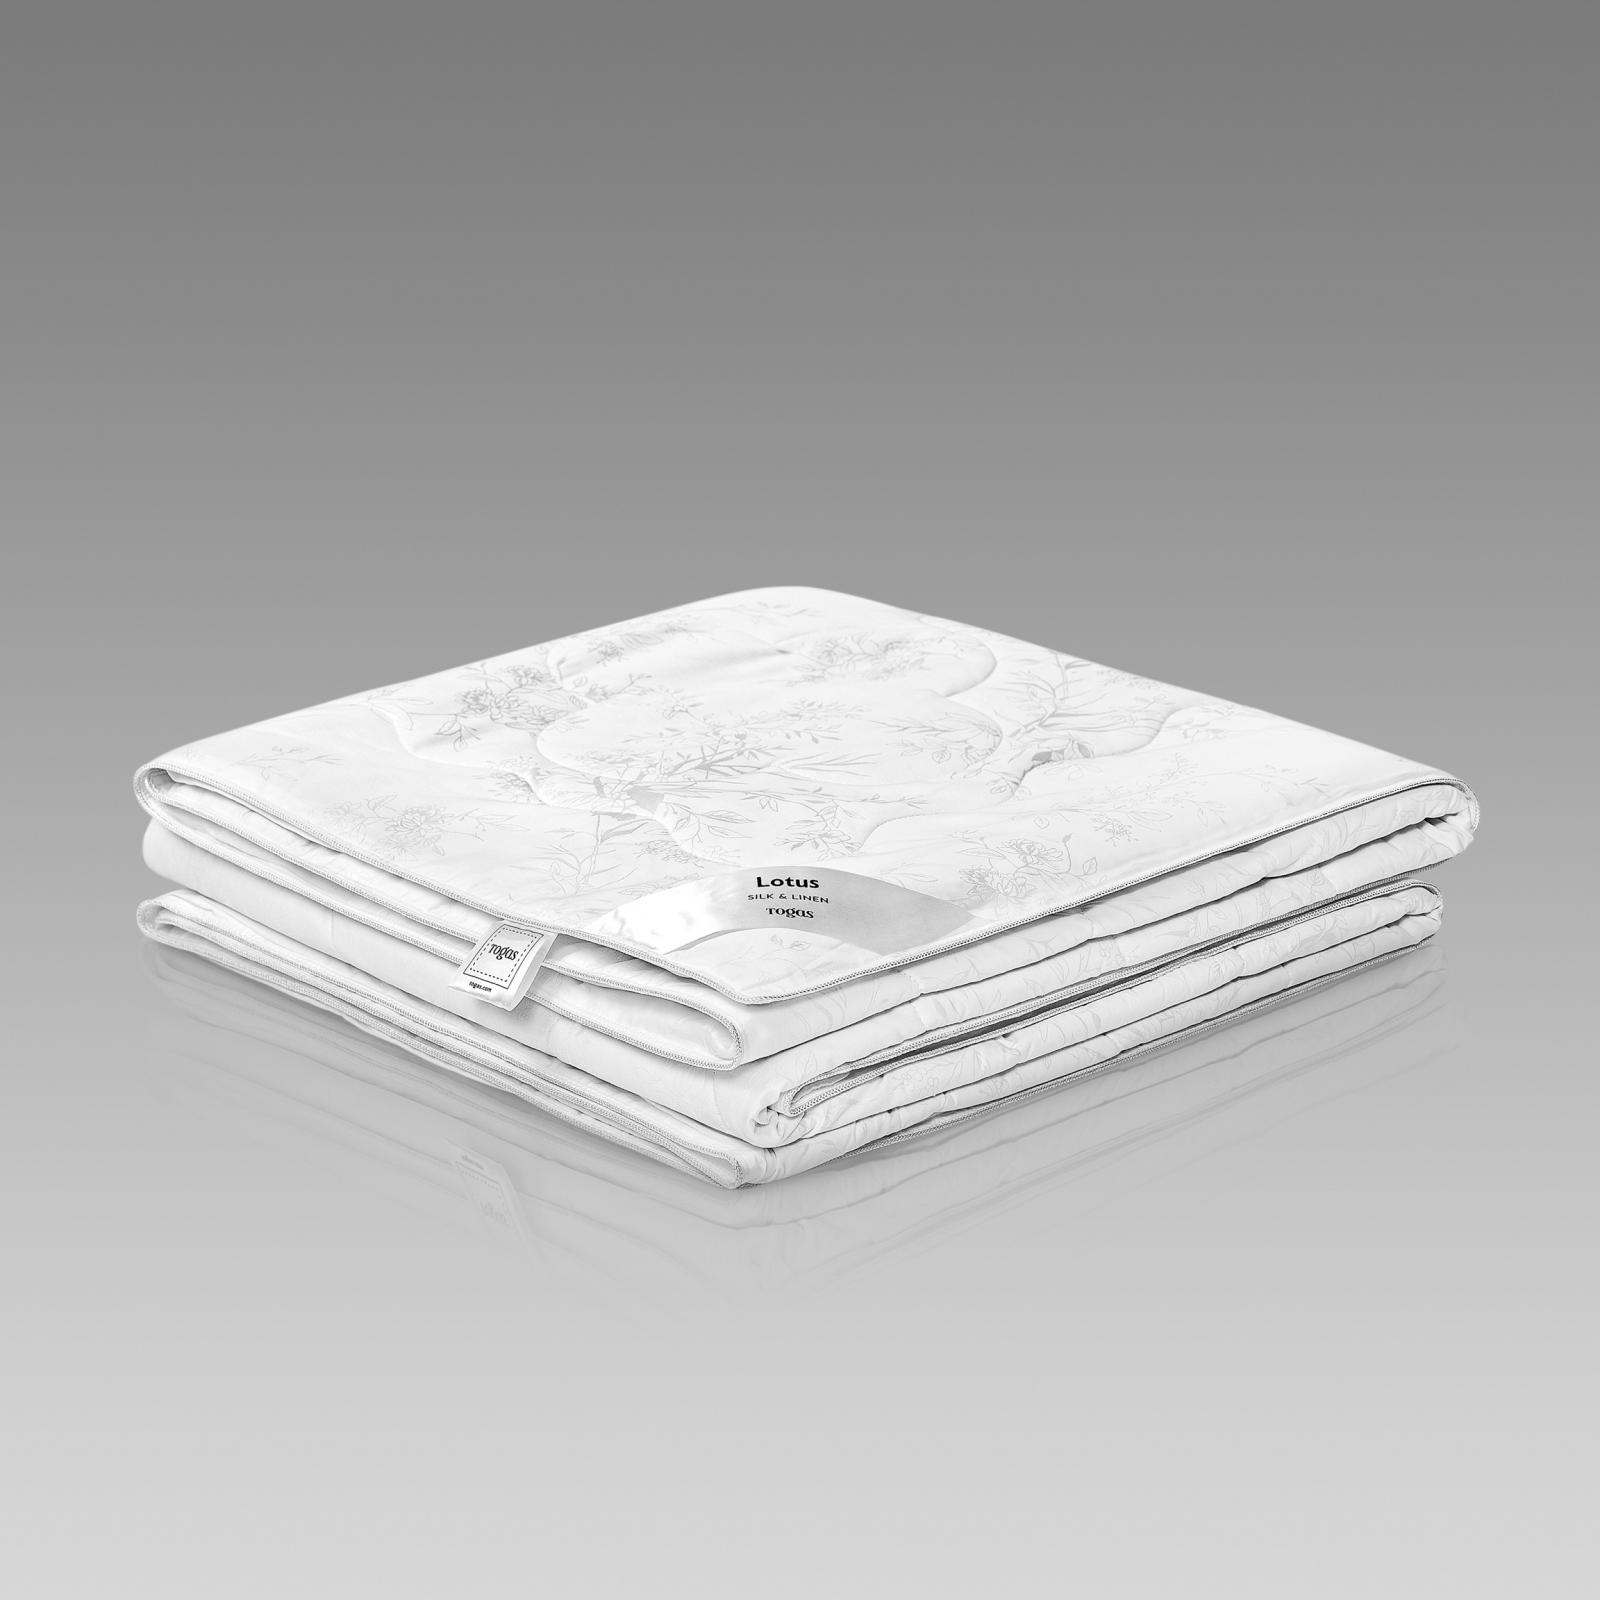 Одеяло Togas Лотос белое 140х200 см (20.04.29.0003) одеяло marc anri rouffach белое 140х200 см ma ec